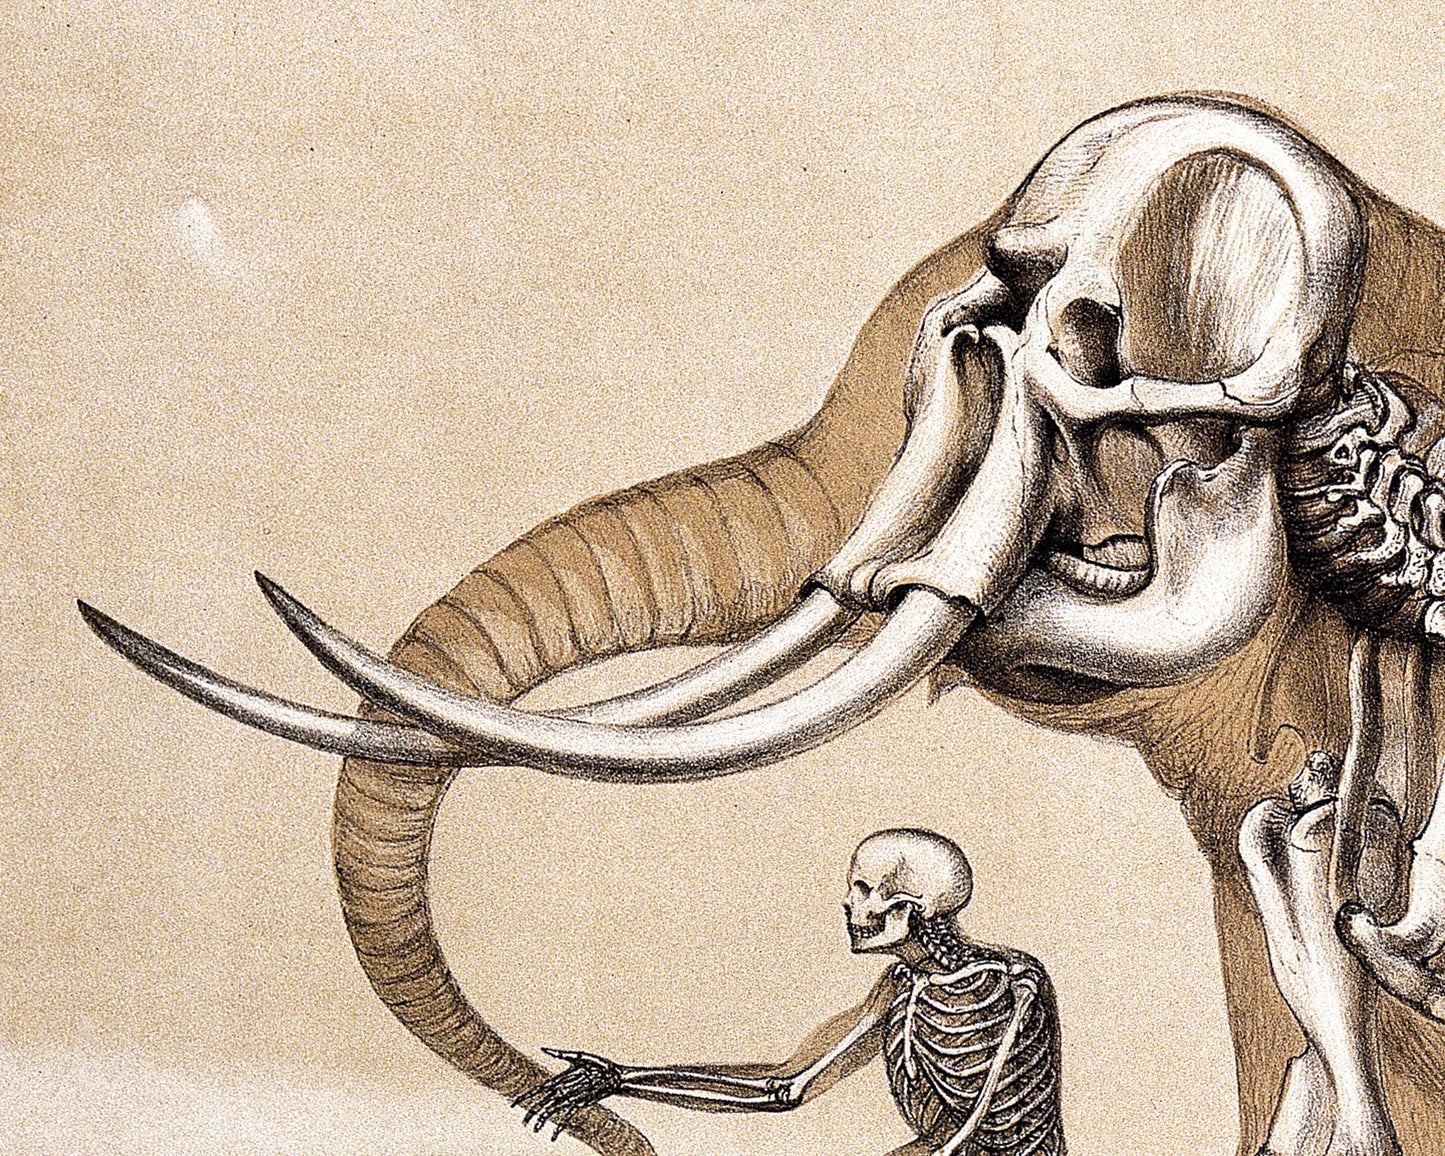 Human & elephant anatomy print | Vintage anatomical illustration | Antique bones | Skeleton wall art | Veterinarian and doctor gift